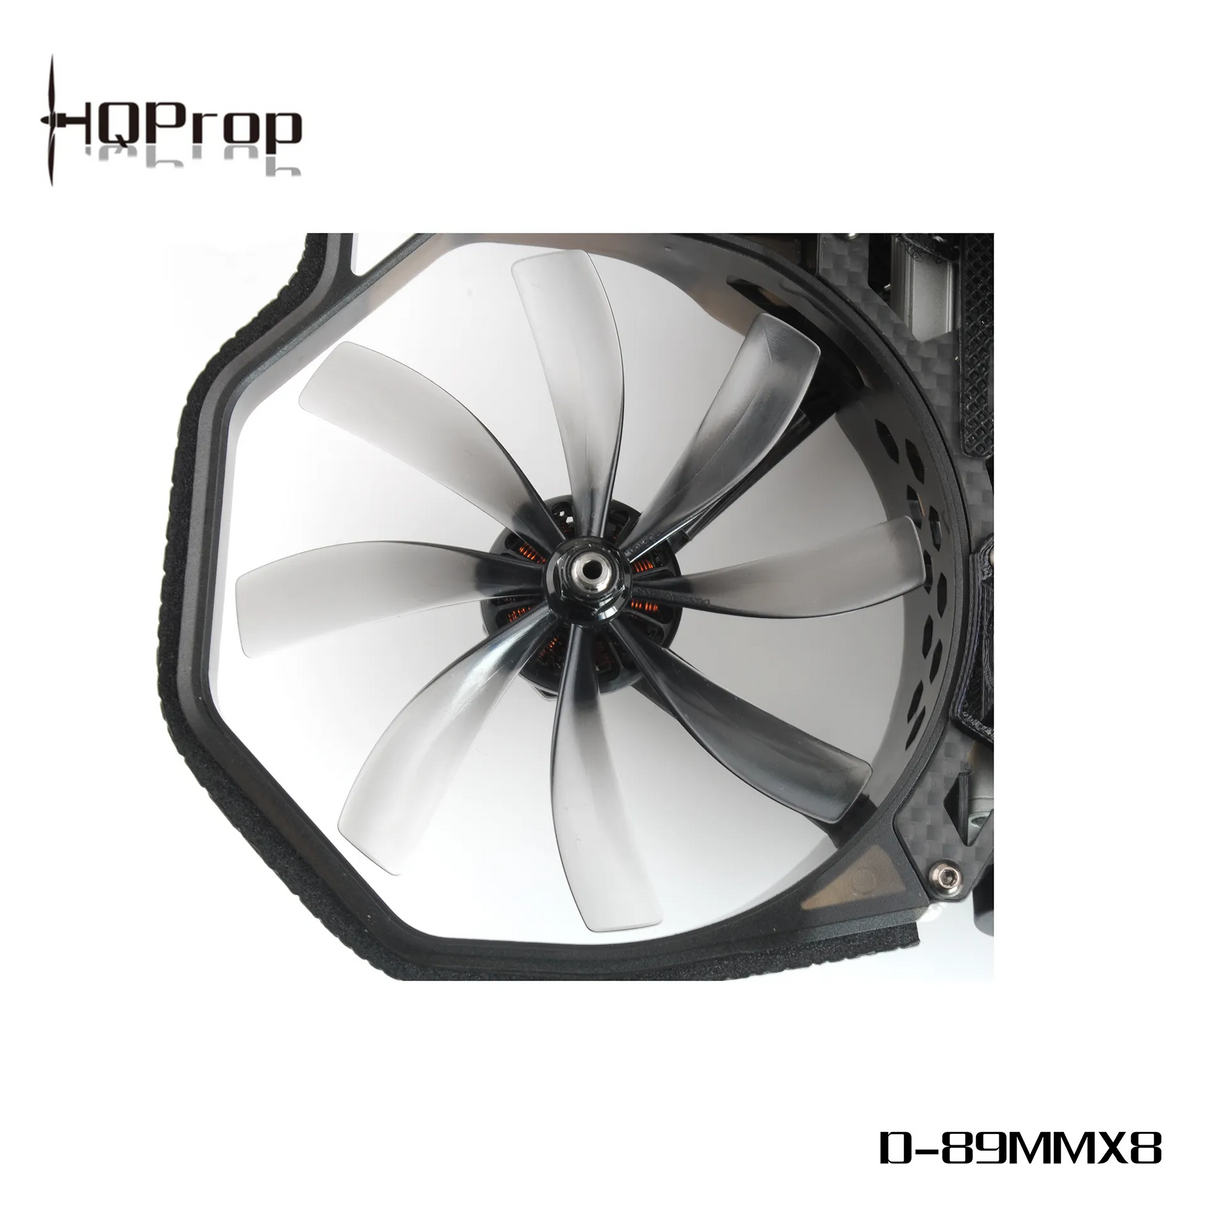 HQProp Duct-89MMX8 - DroneDynamics.ca